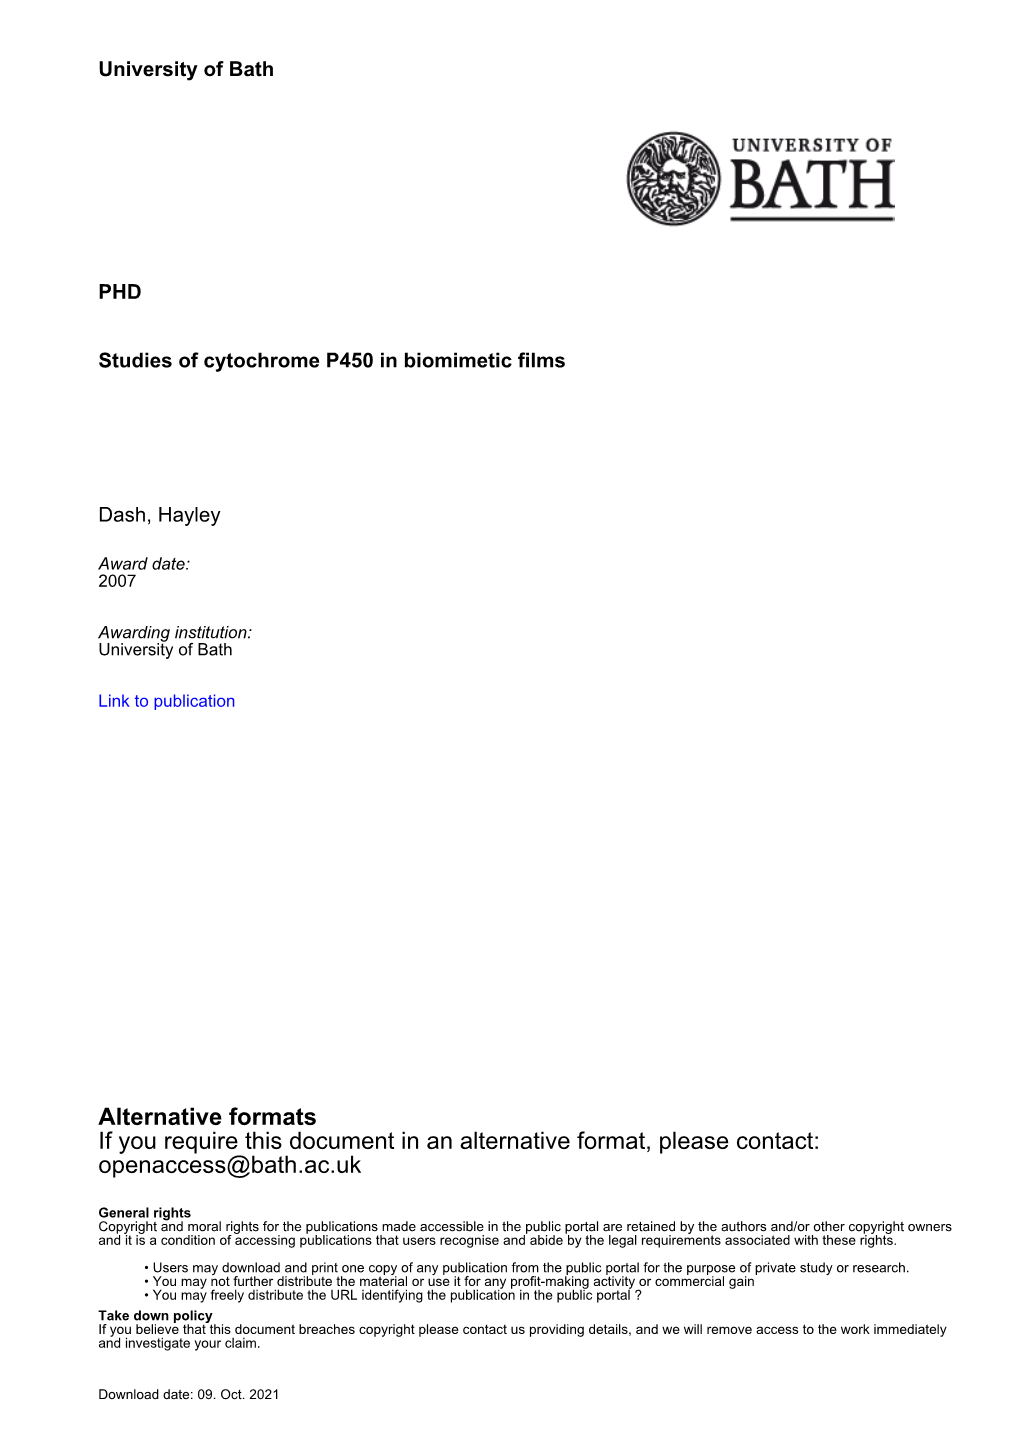 Studies of Cytochrome P450 in Biomimetic Films